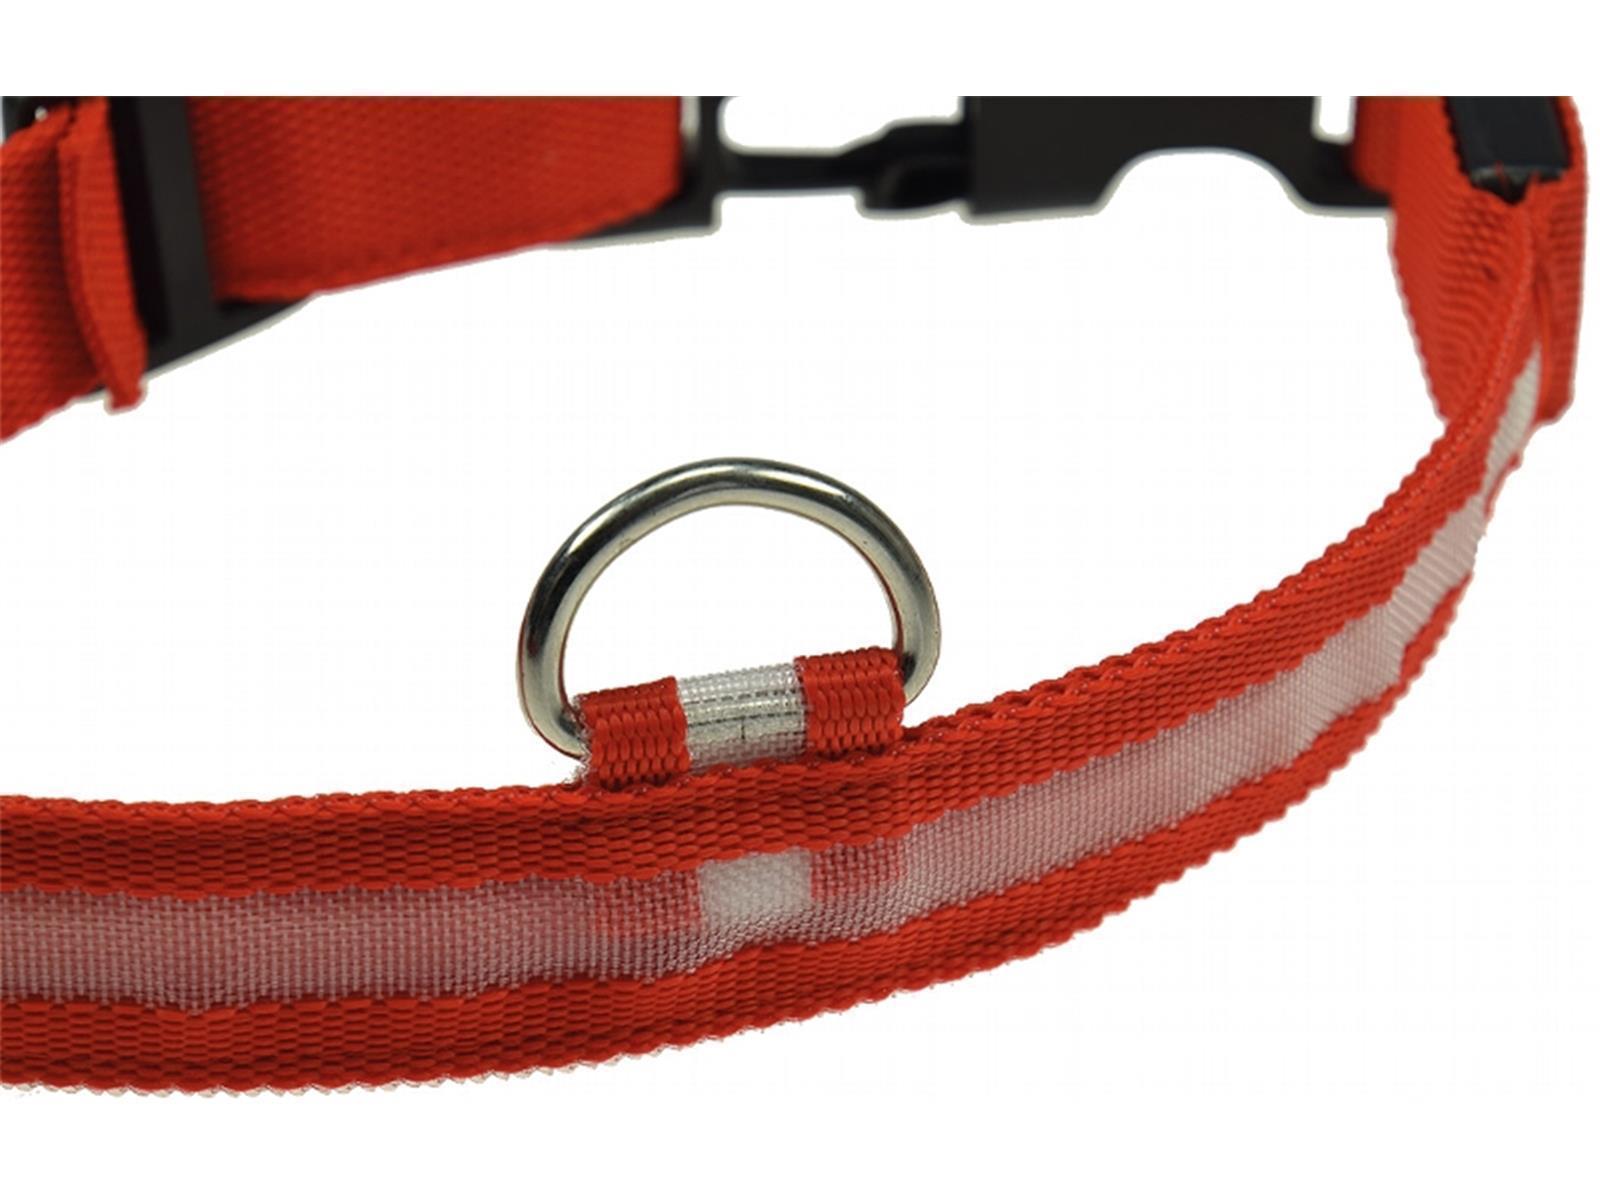 Hunde-Halsband leuchtend mit LED52-60cm, Größe XL, rot